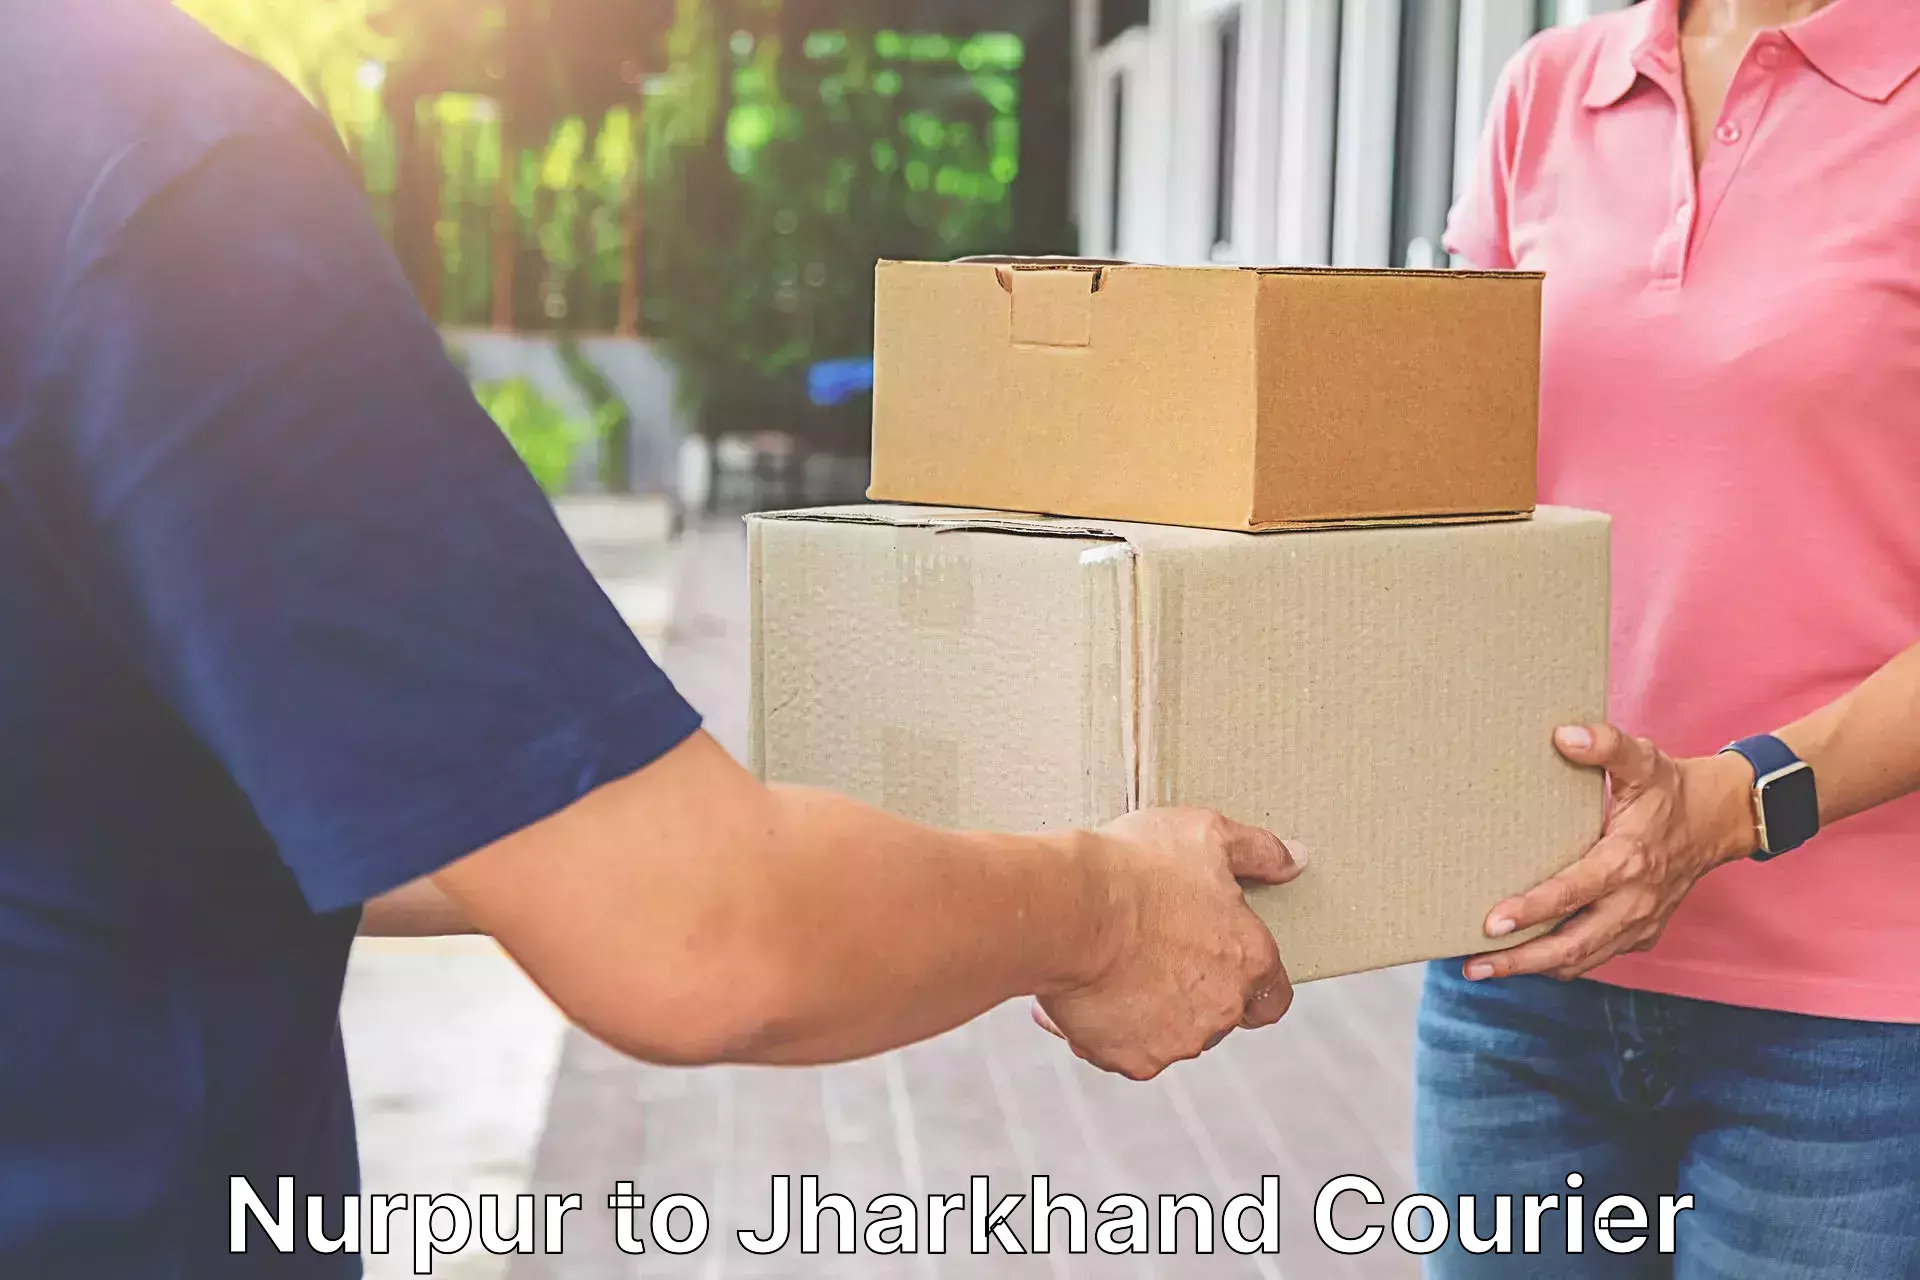 24-hour courier service Nurpur to Jamshedpur